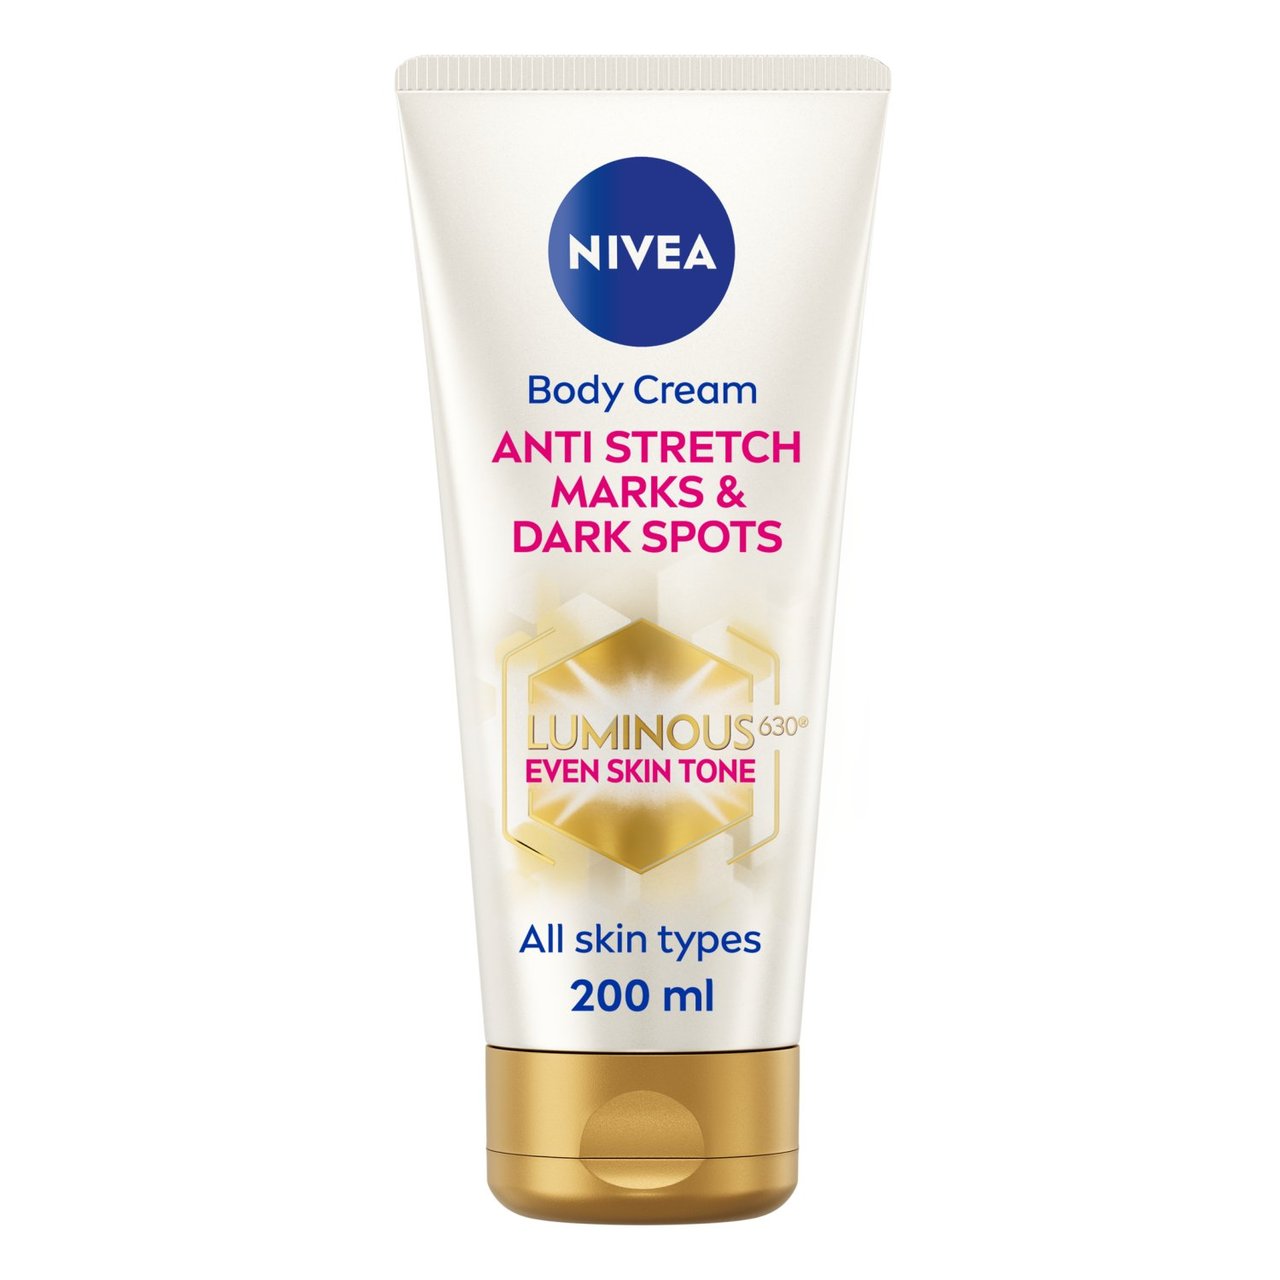 NIVEA Luminous 630 Anti-Stretch Marks & Dark Spots Body Cream